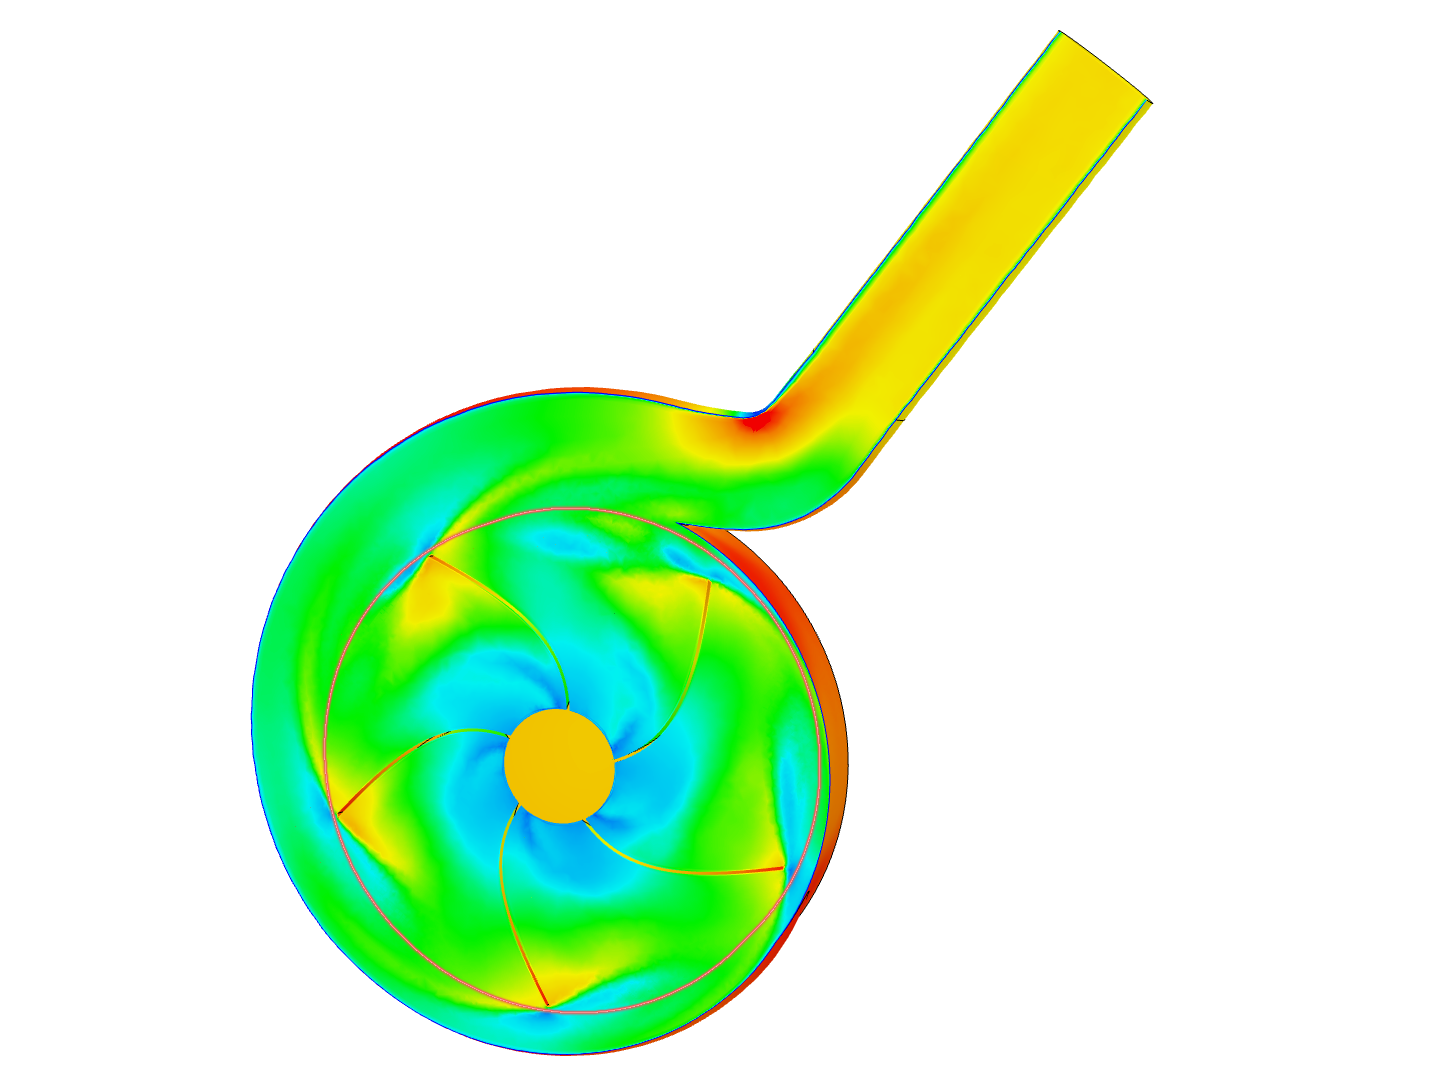 Coursera pump simulation image